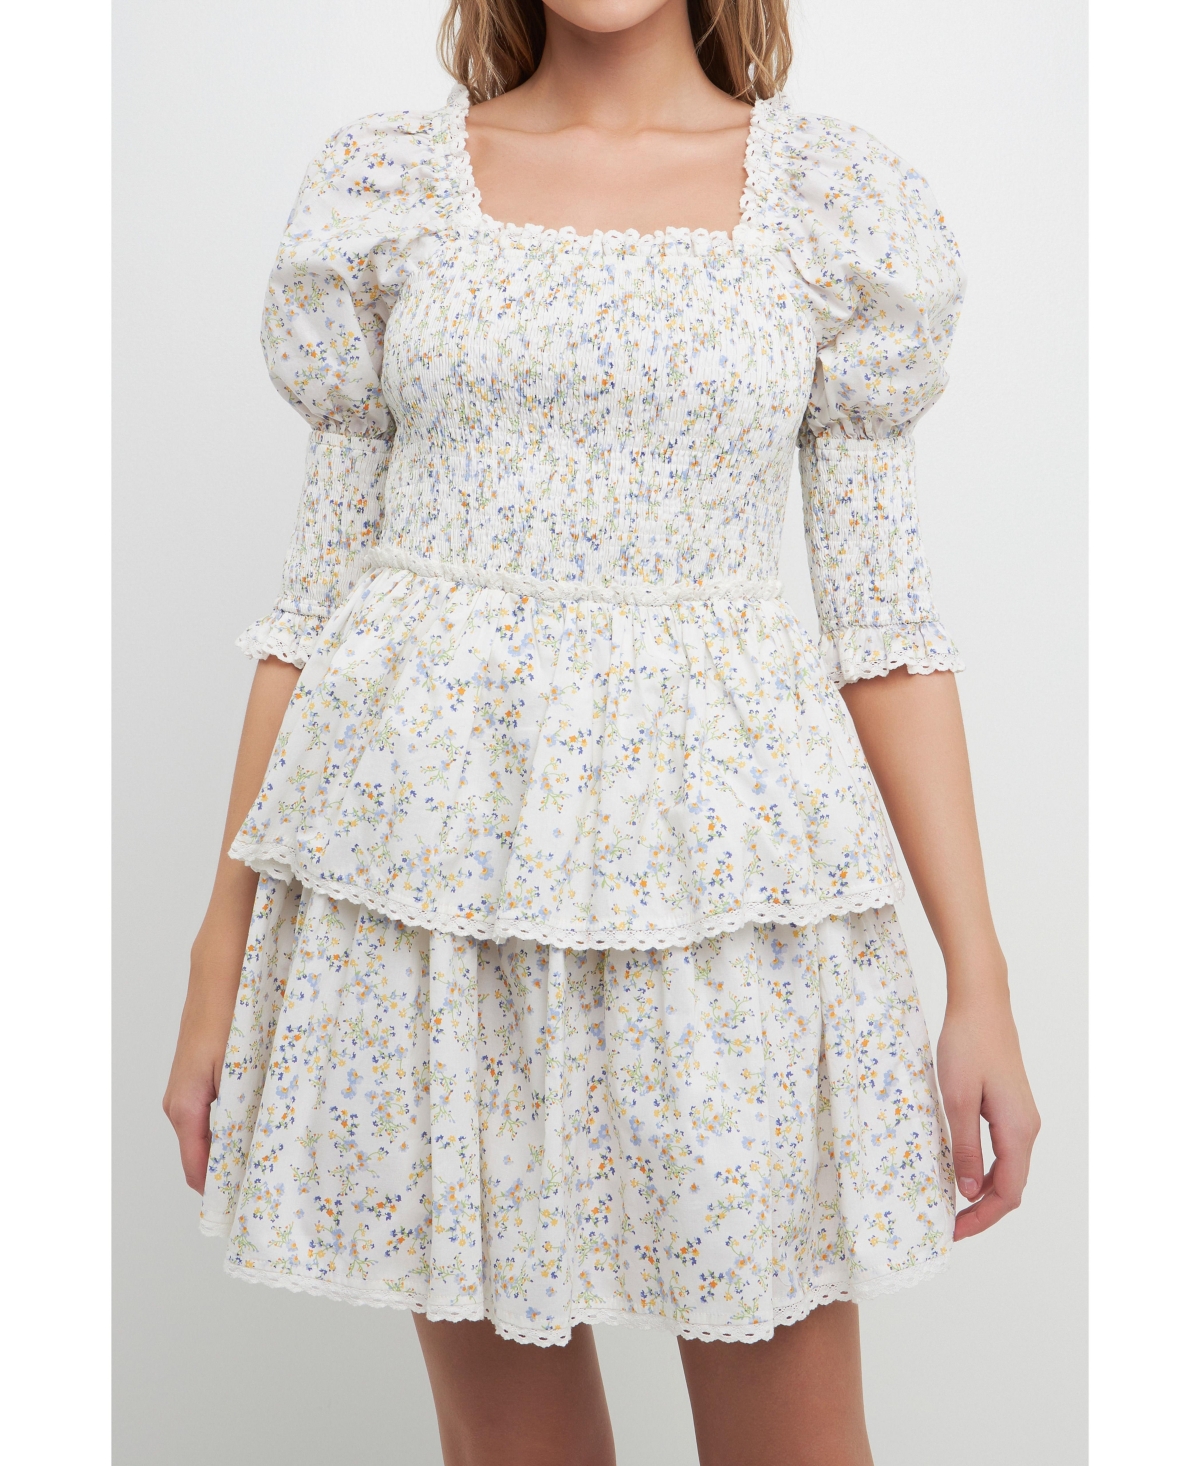 Women's Lace Trim Floral Print Smocked Sleeve Mini Dress - White